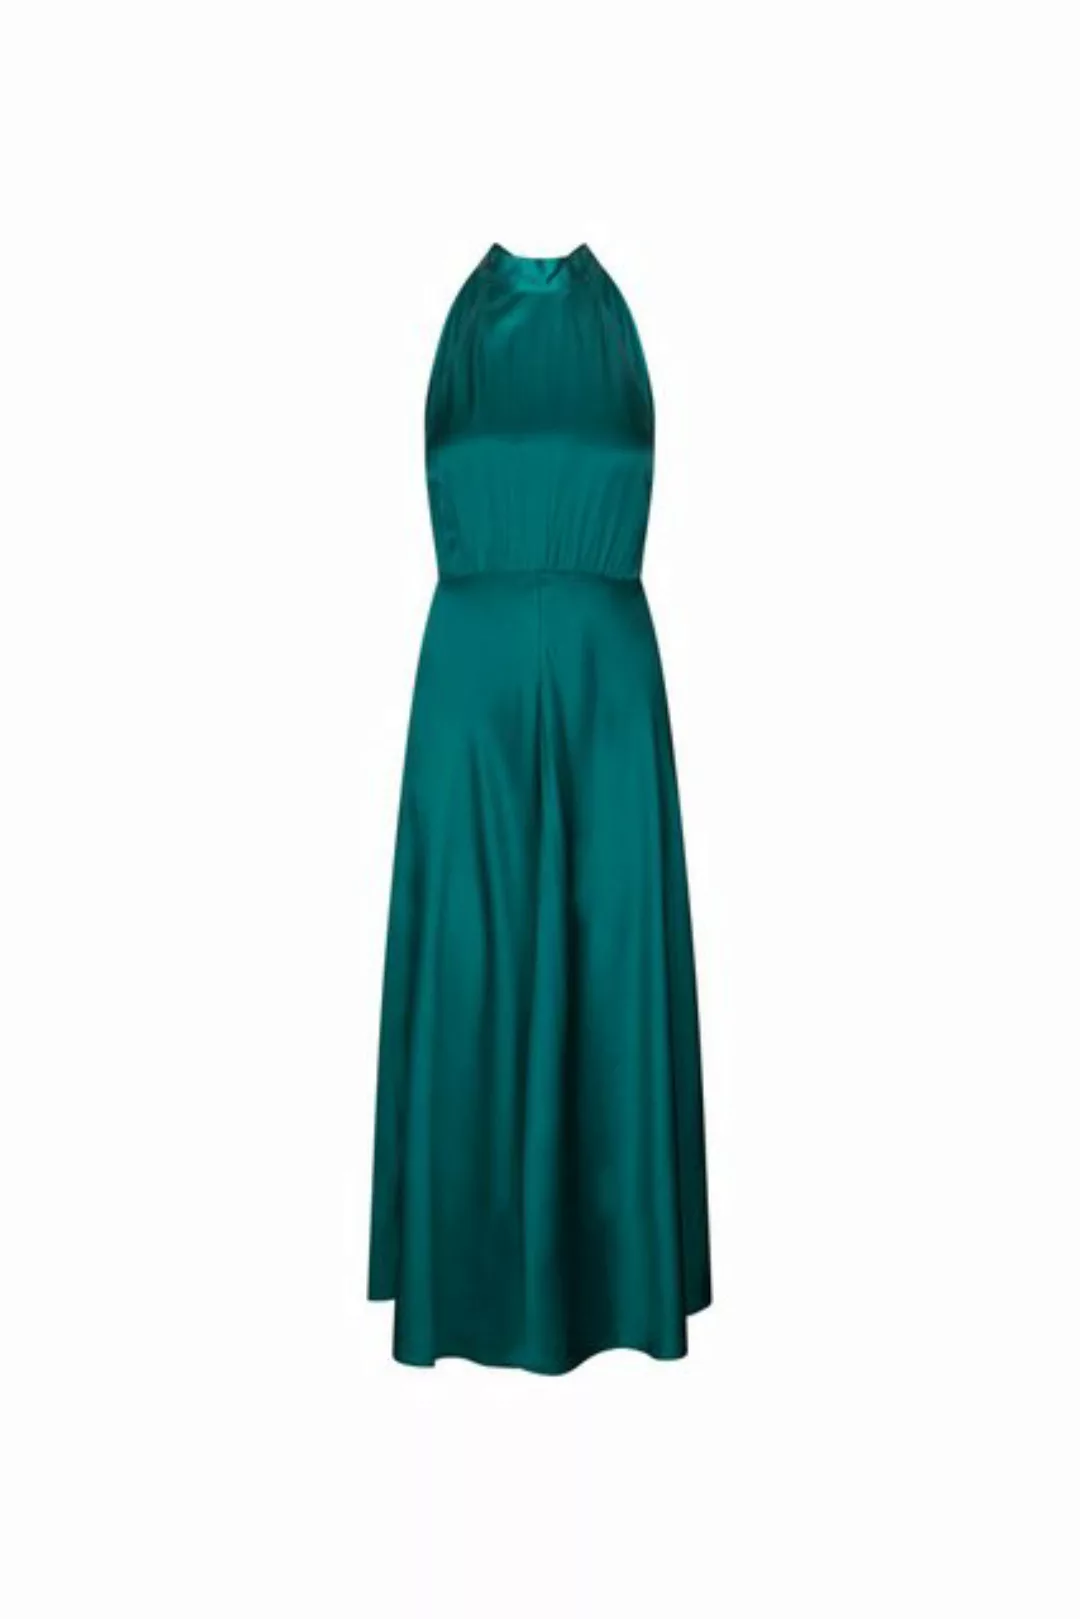 Samsoe & Samsoe Midikleid Rheo dress 14905 günstig online kaufen